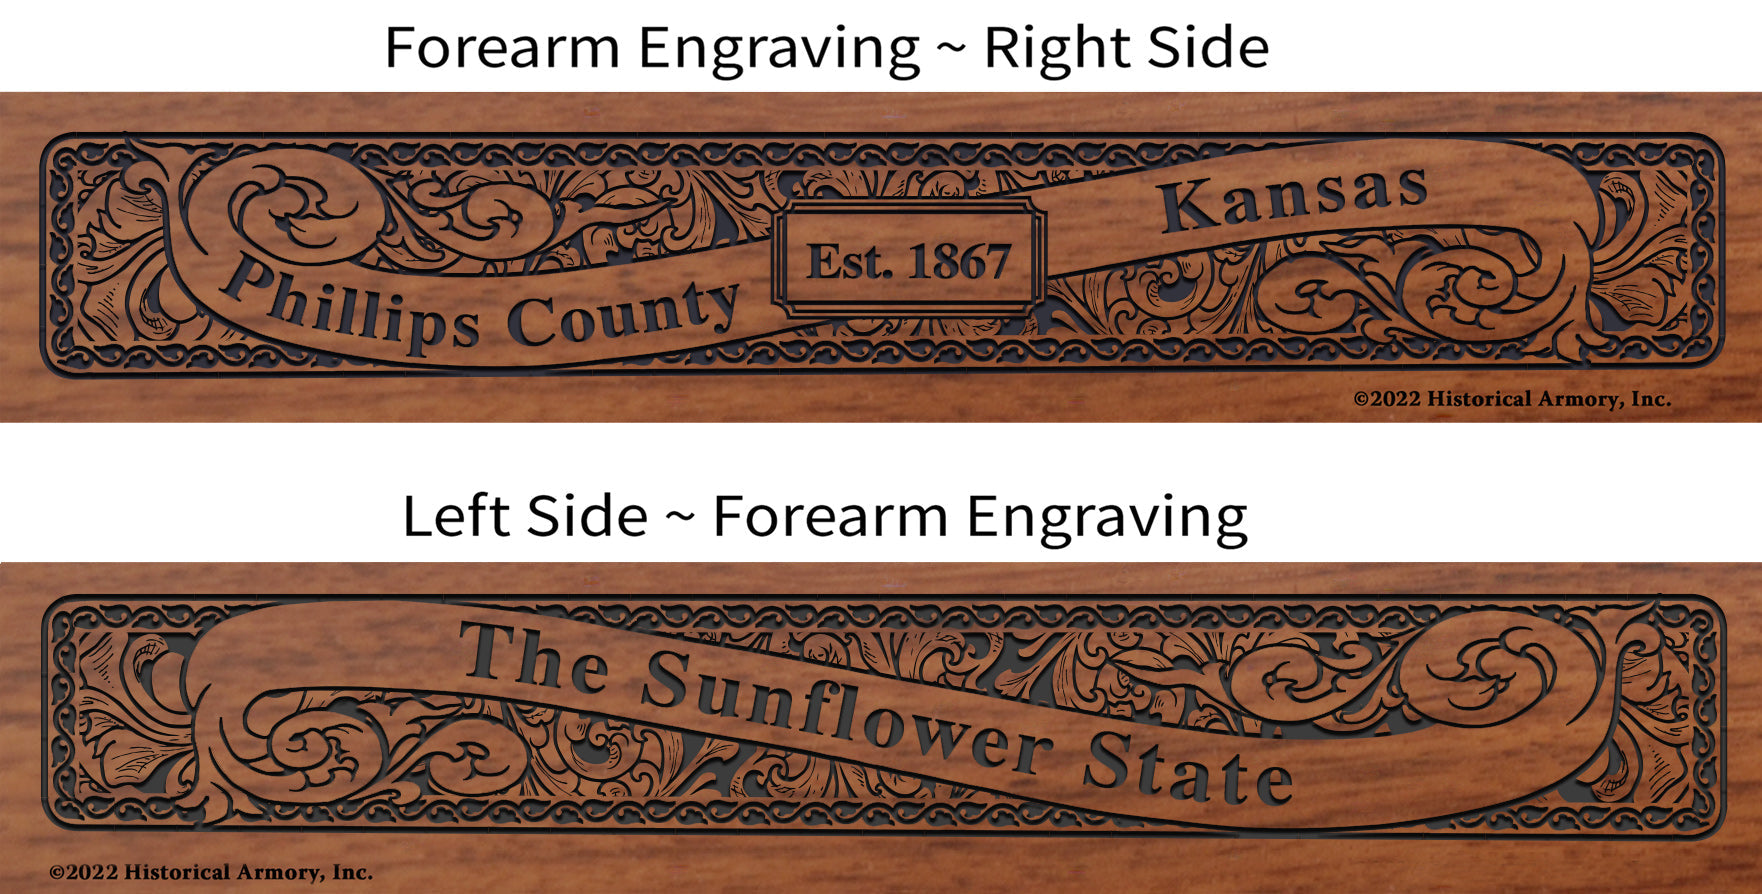 Phillips County Kansas Engraved Rifle Forearm